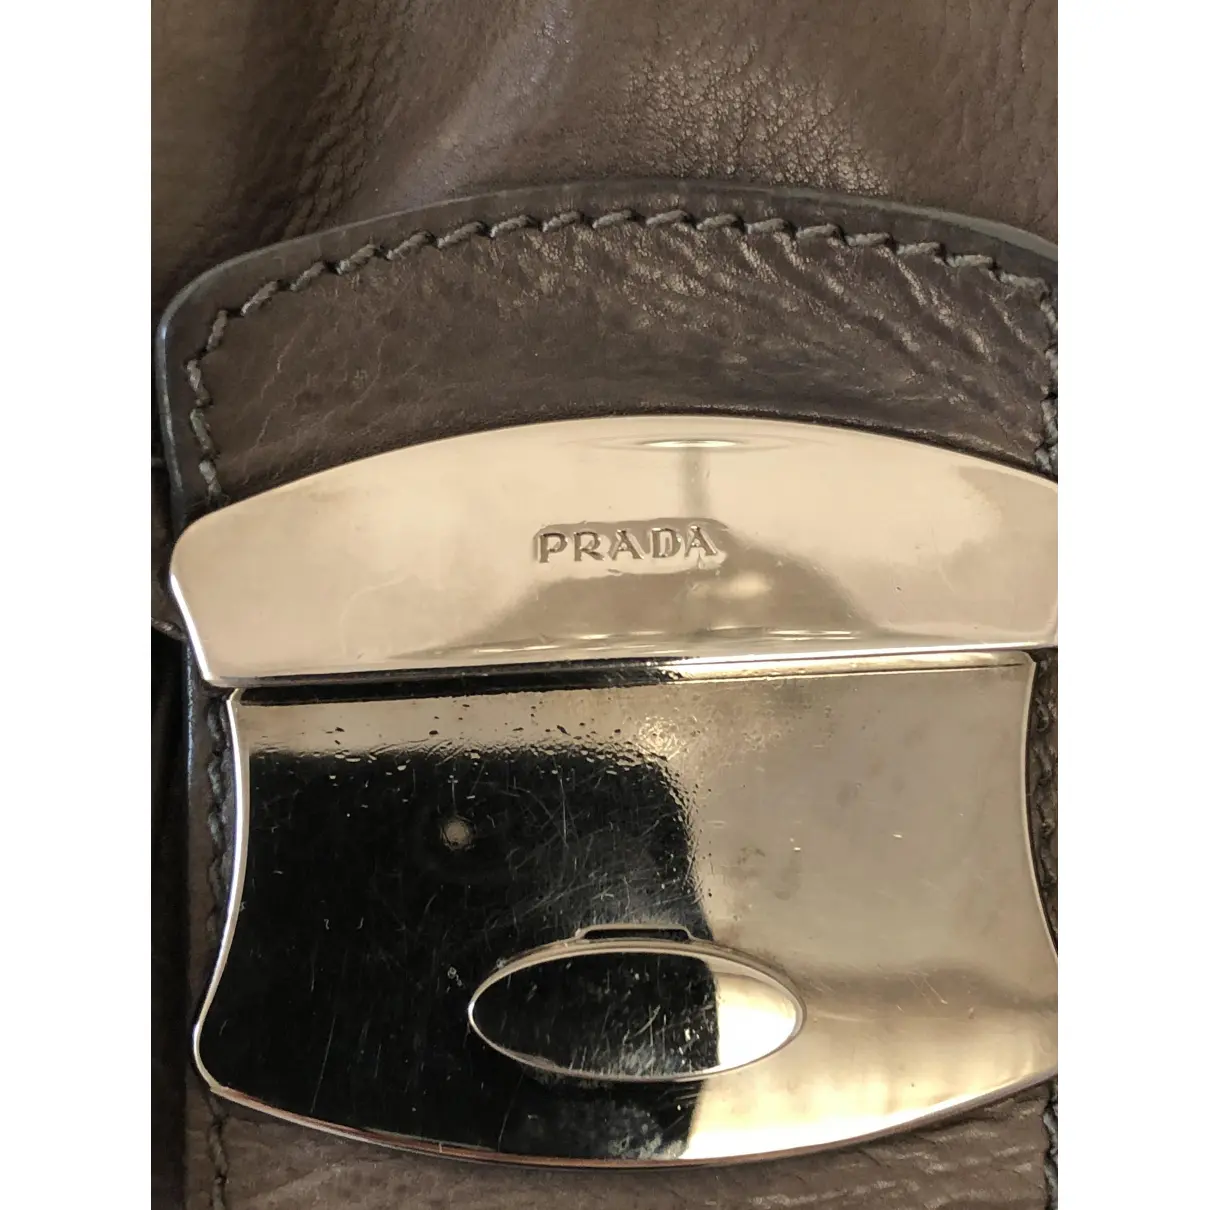 Buy Prada Leather handbag online - Vintage